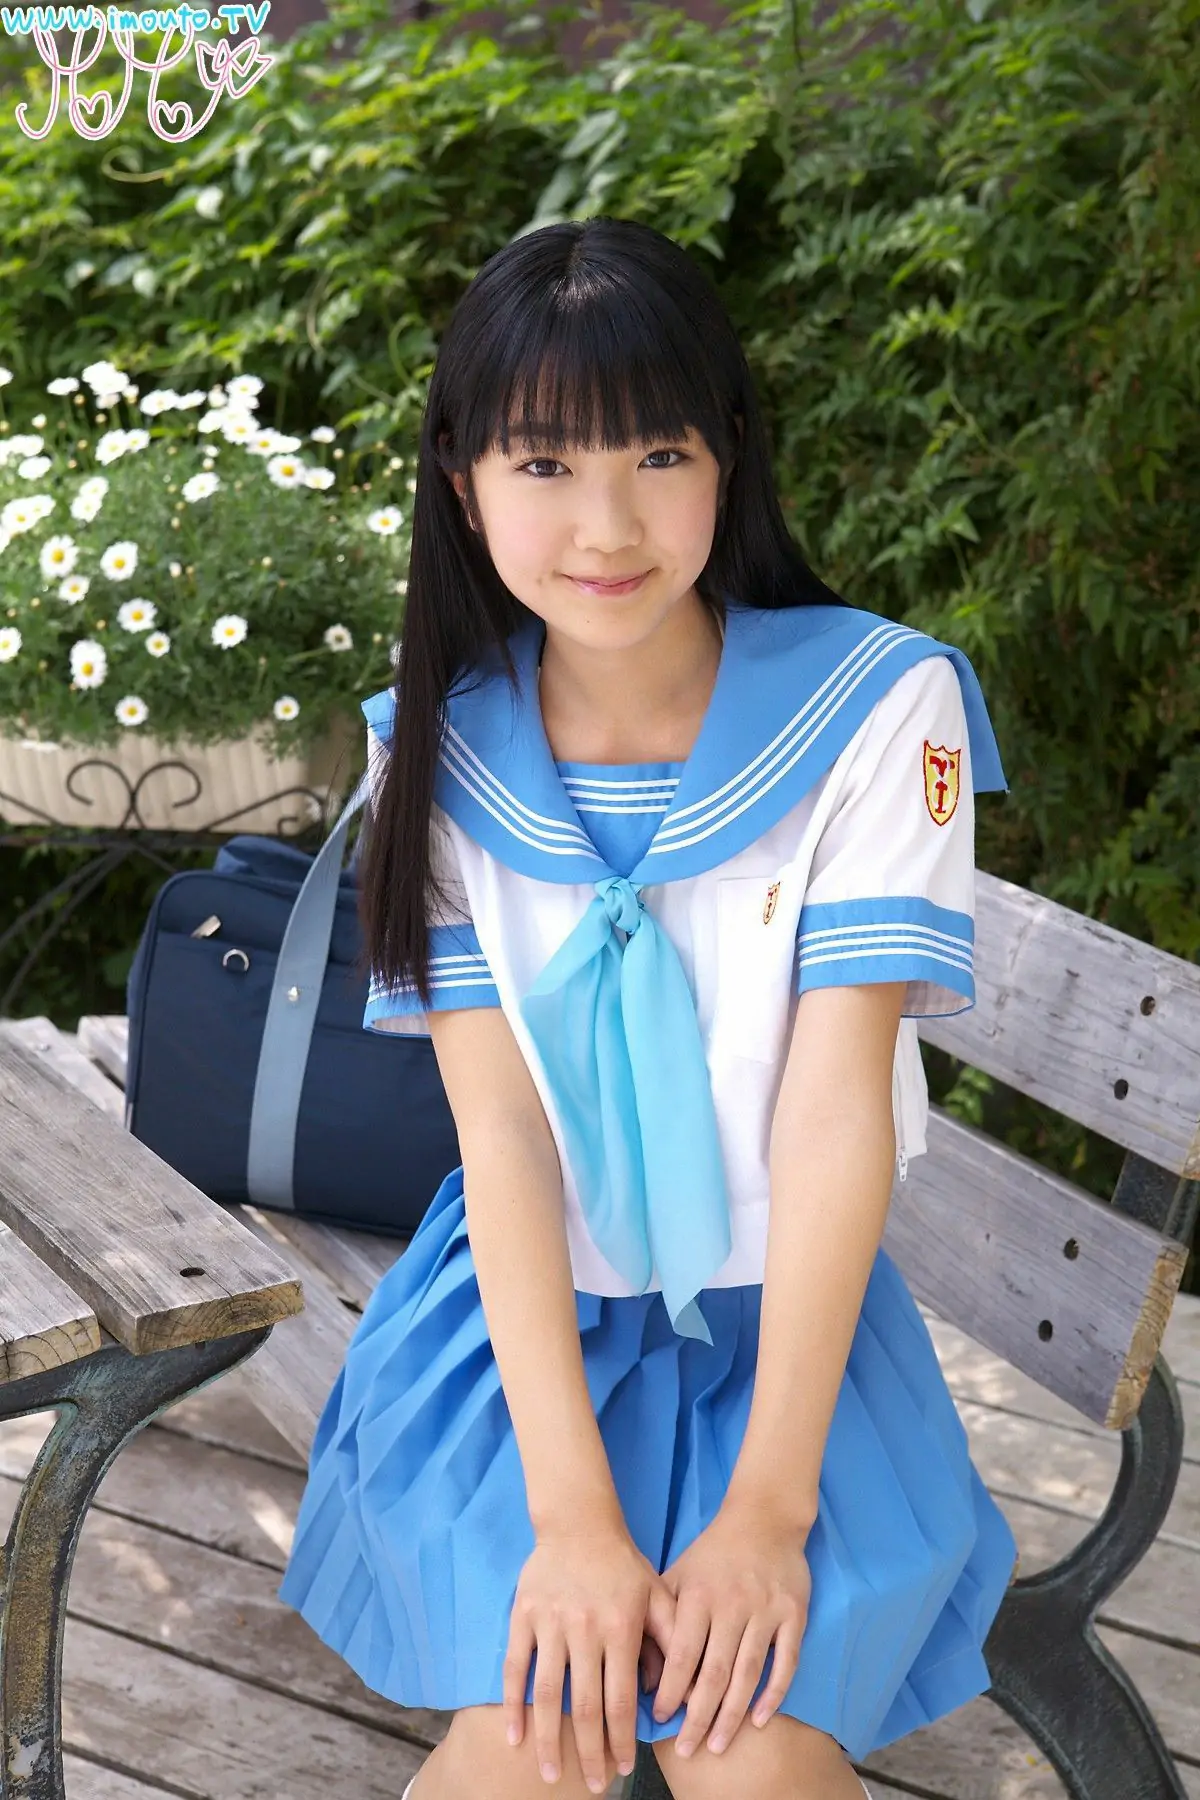 momo shiina shimacolle 6 ガーリーガールピクチャーギャラリー - 美女写真Girly Girl ...